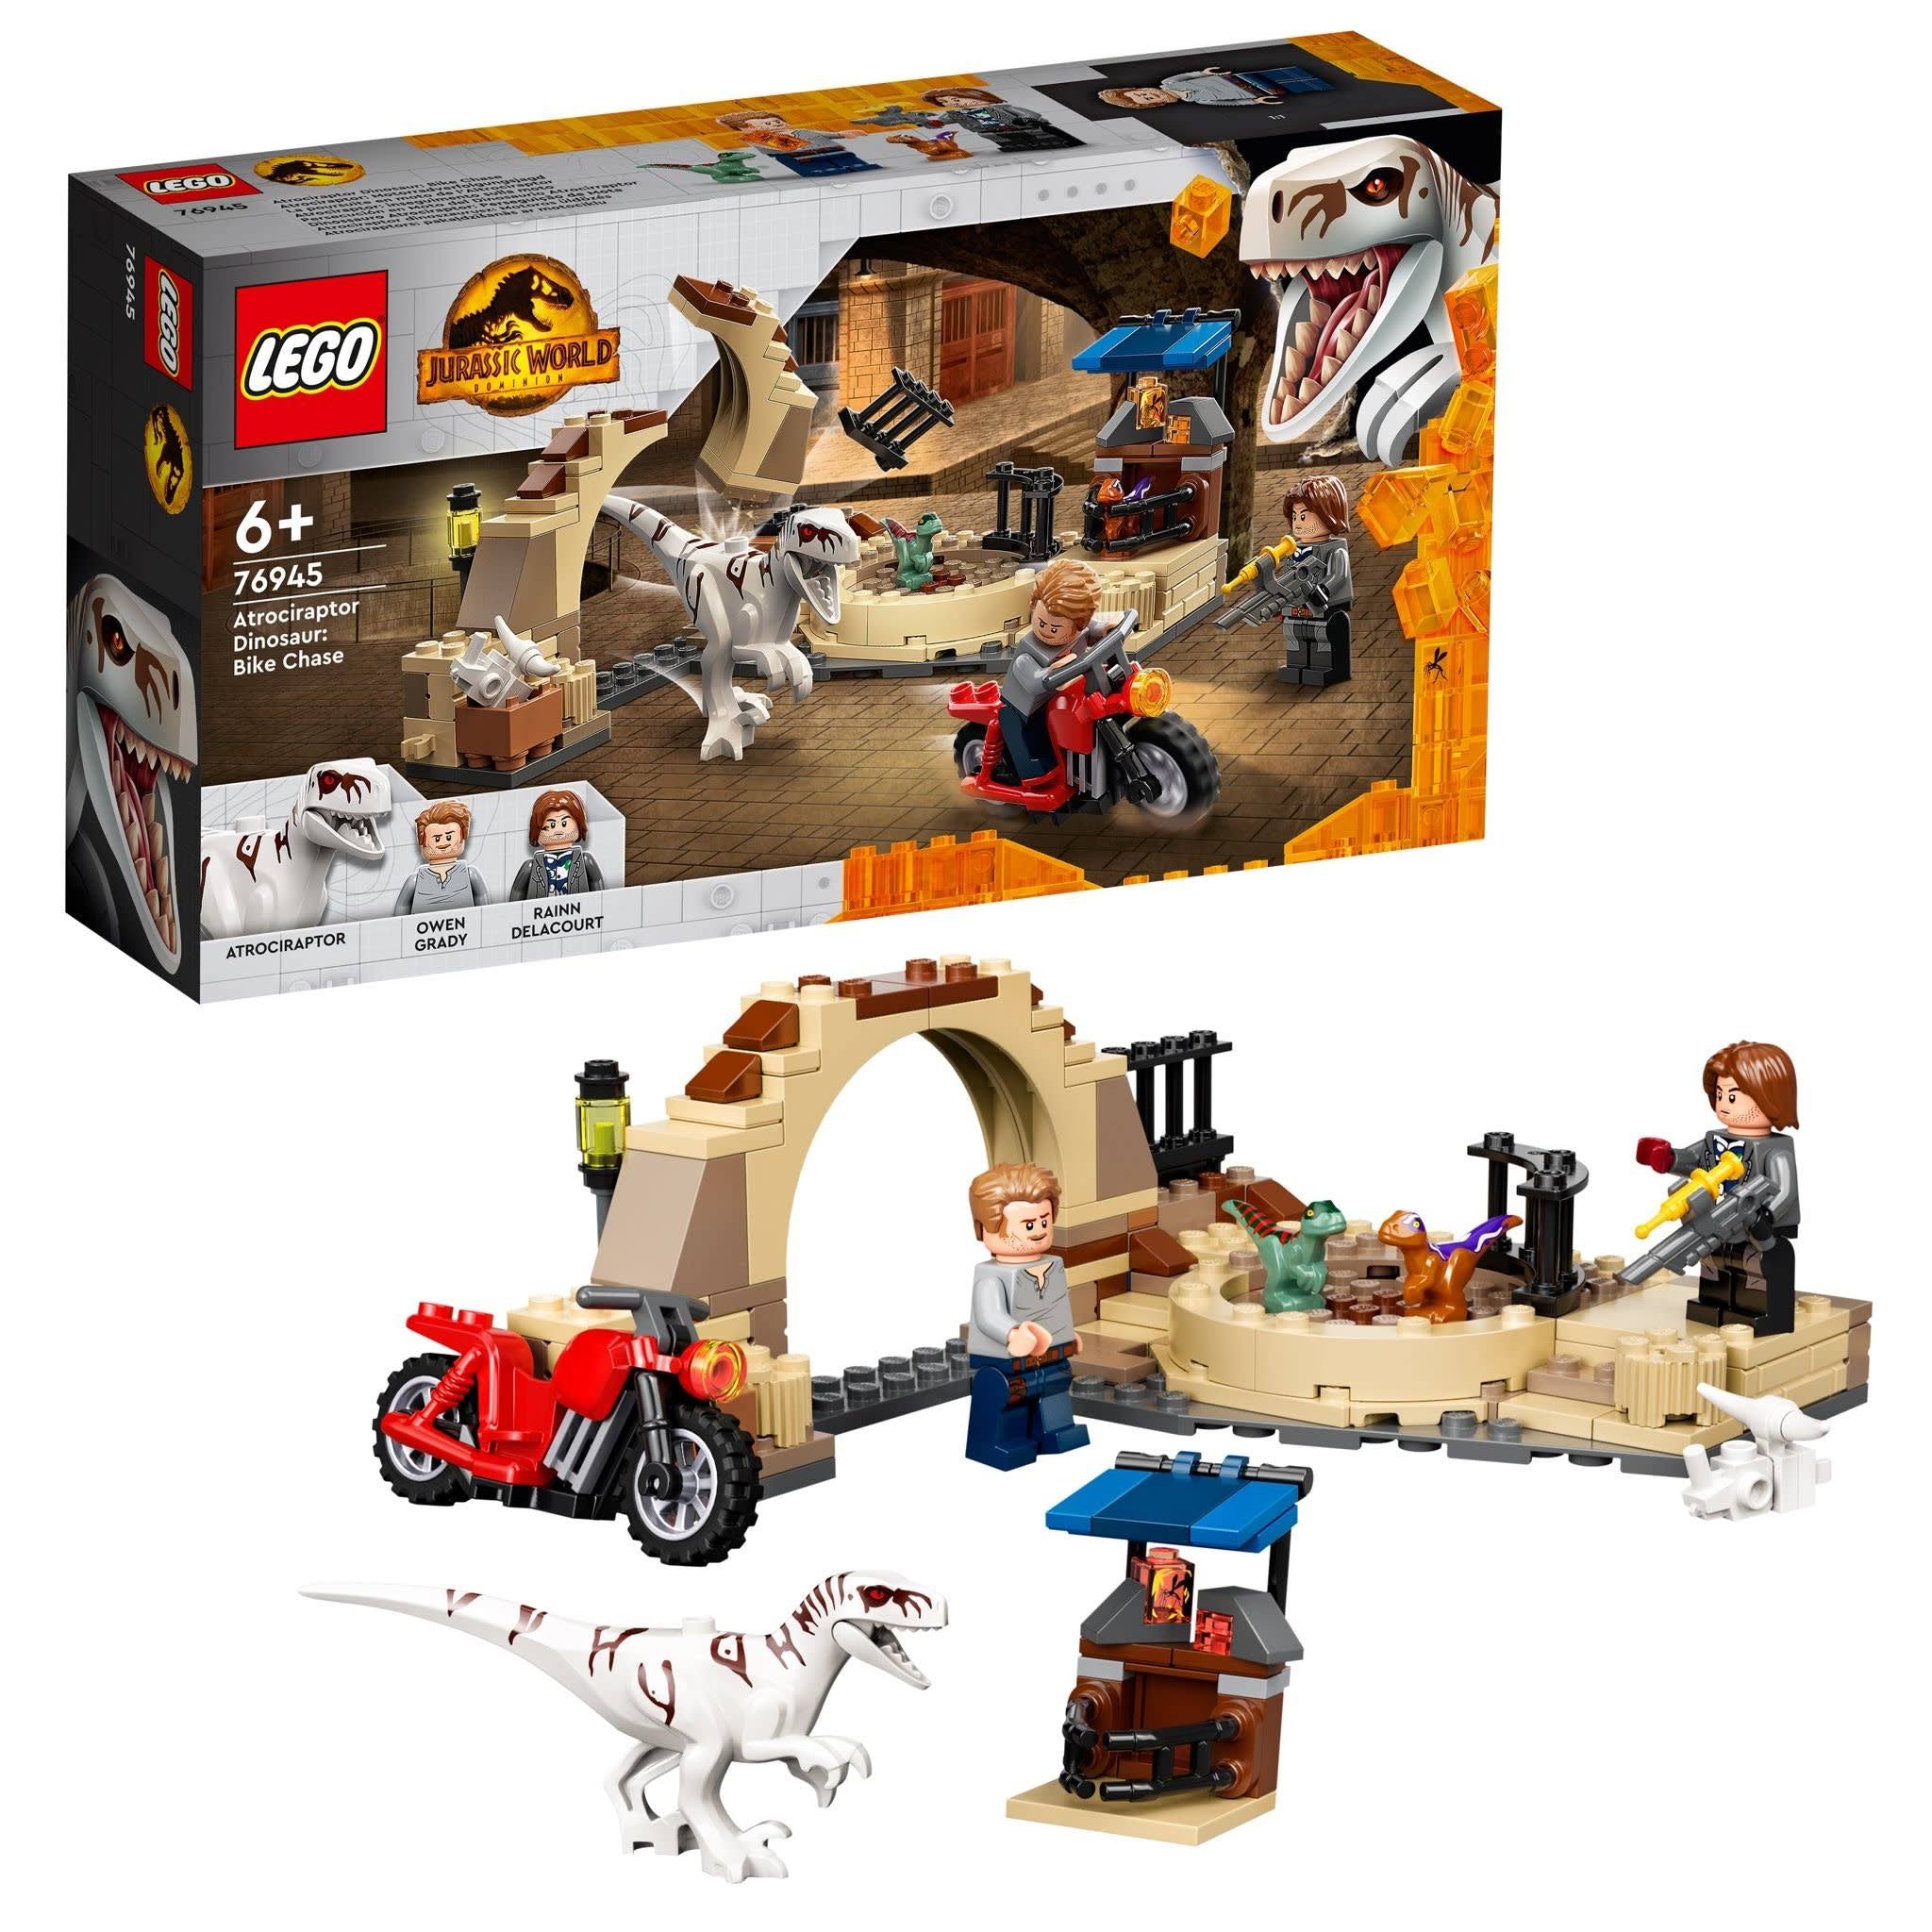 LEGO Atrociraptor Dinosaur: Bike Chase - 76945